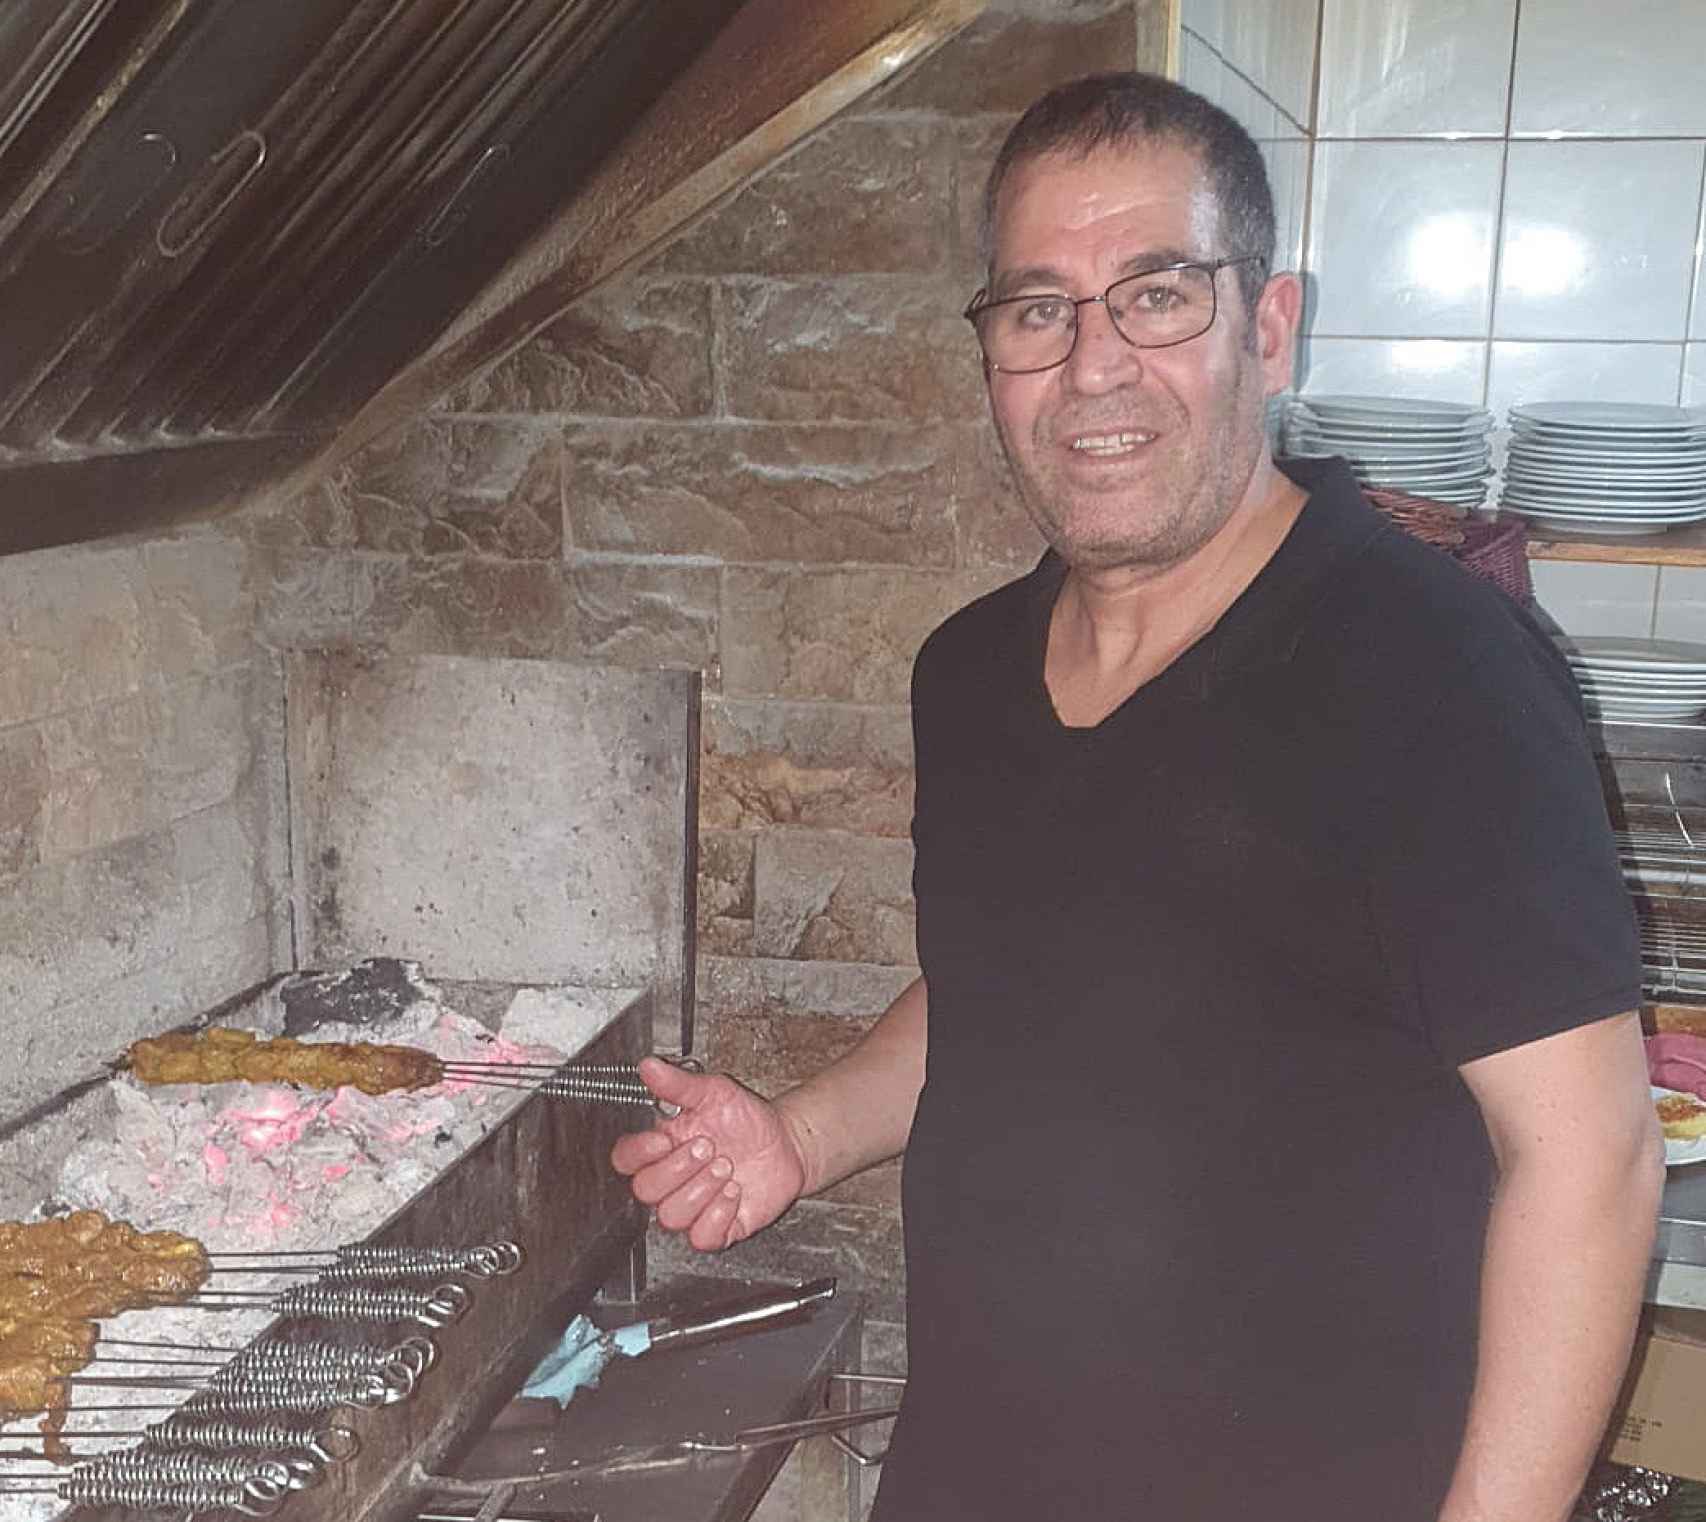 Abdelhakim cocinando